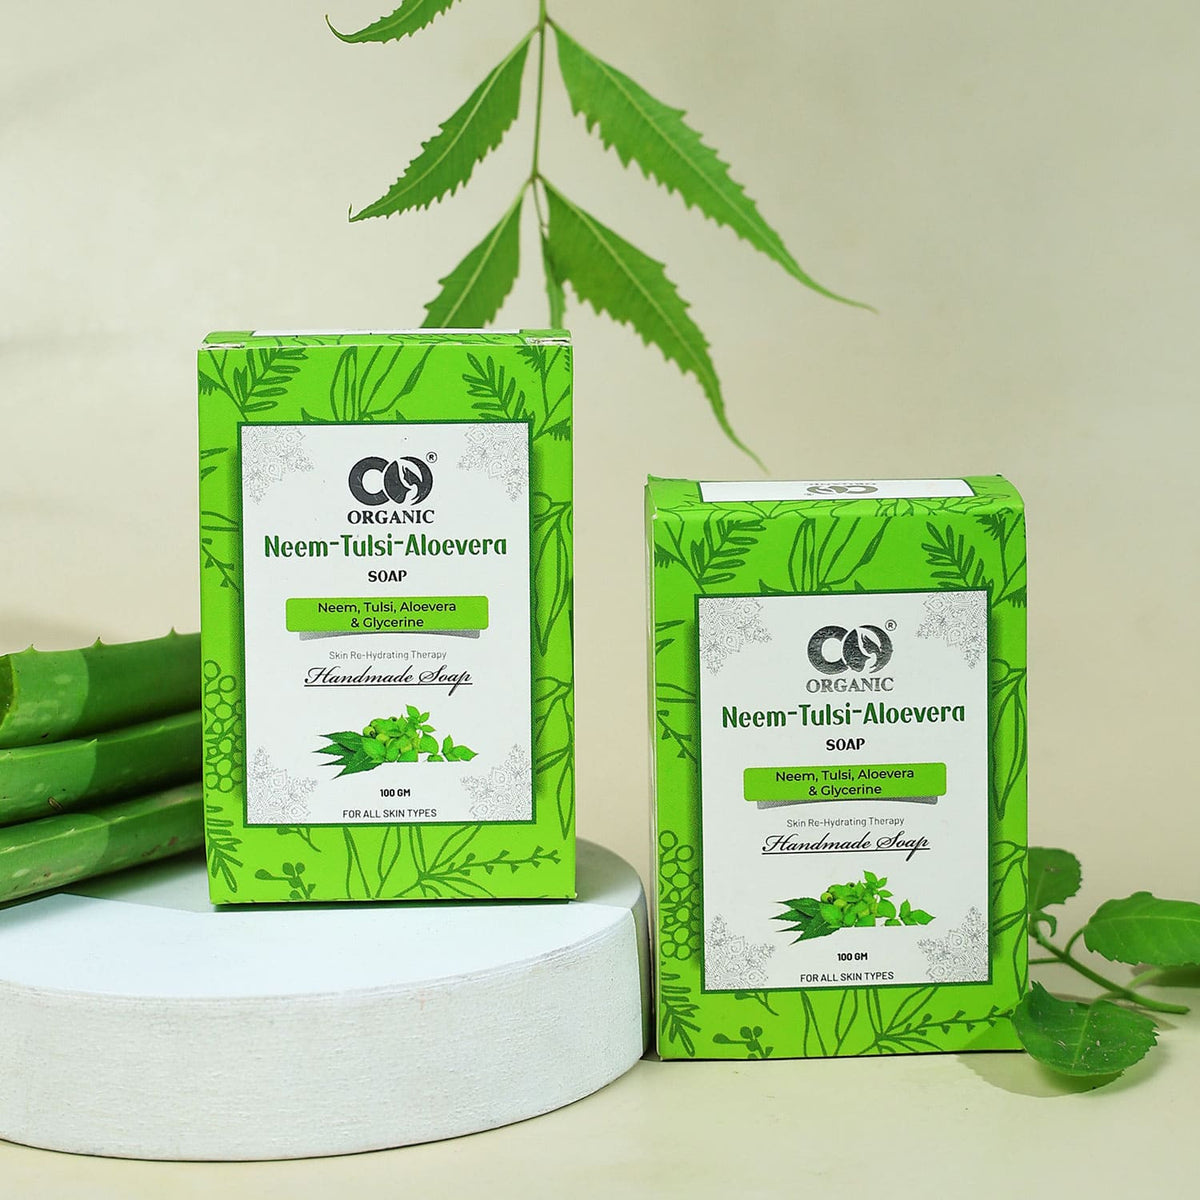 Co Organic Neem, Tulsi, Aloevera Soap - Pack of 2